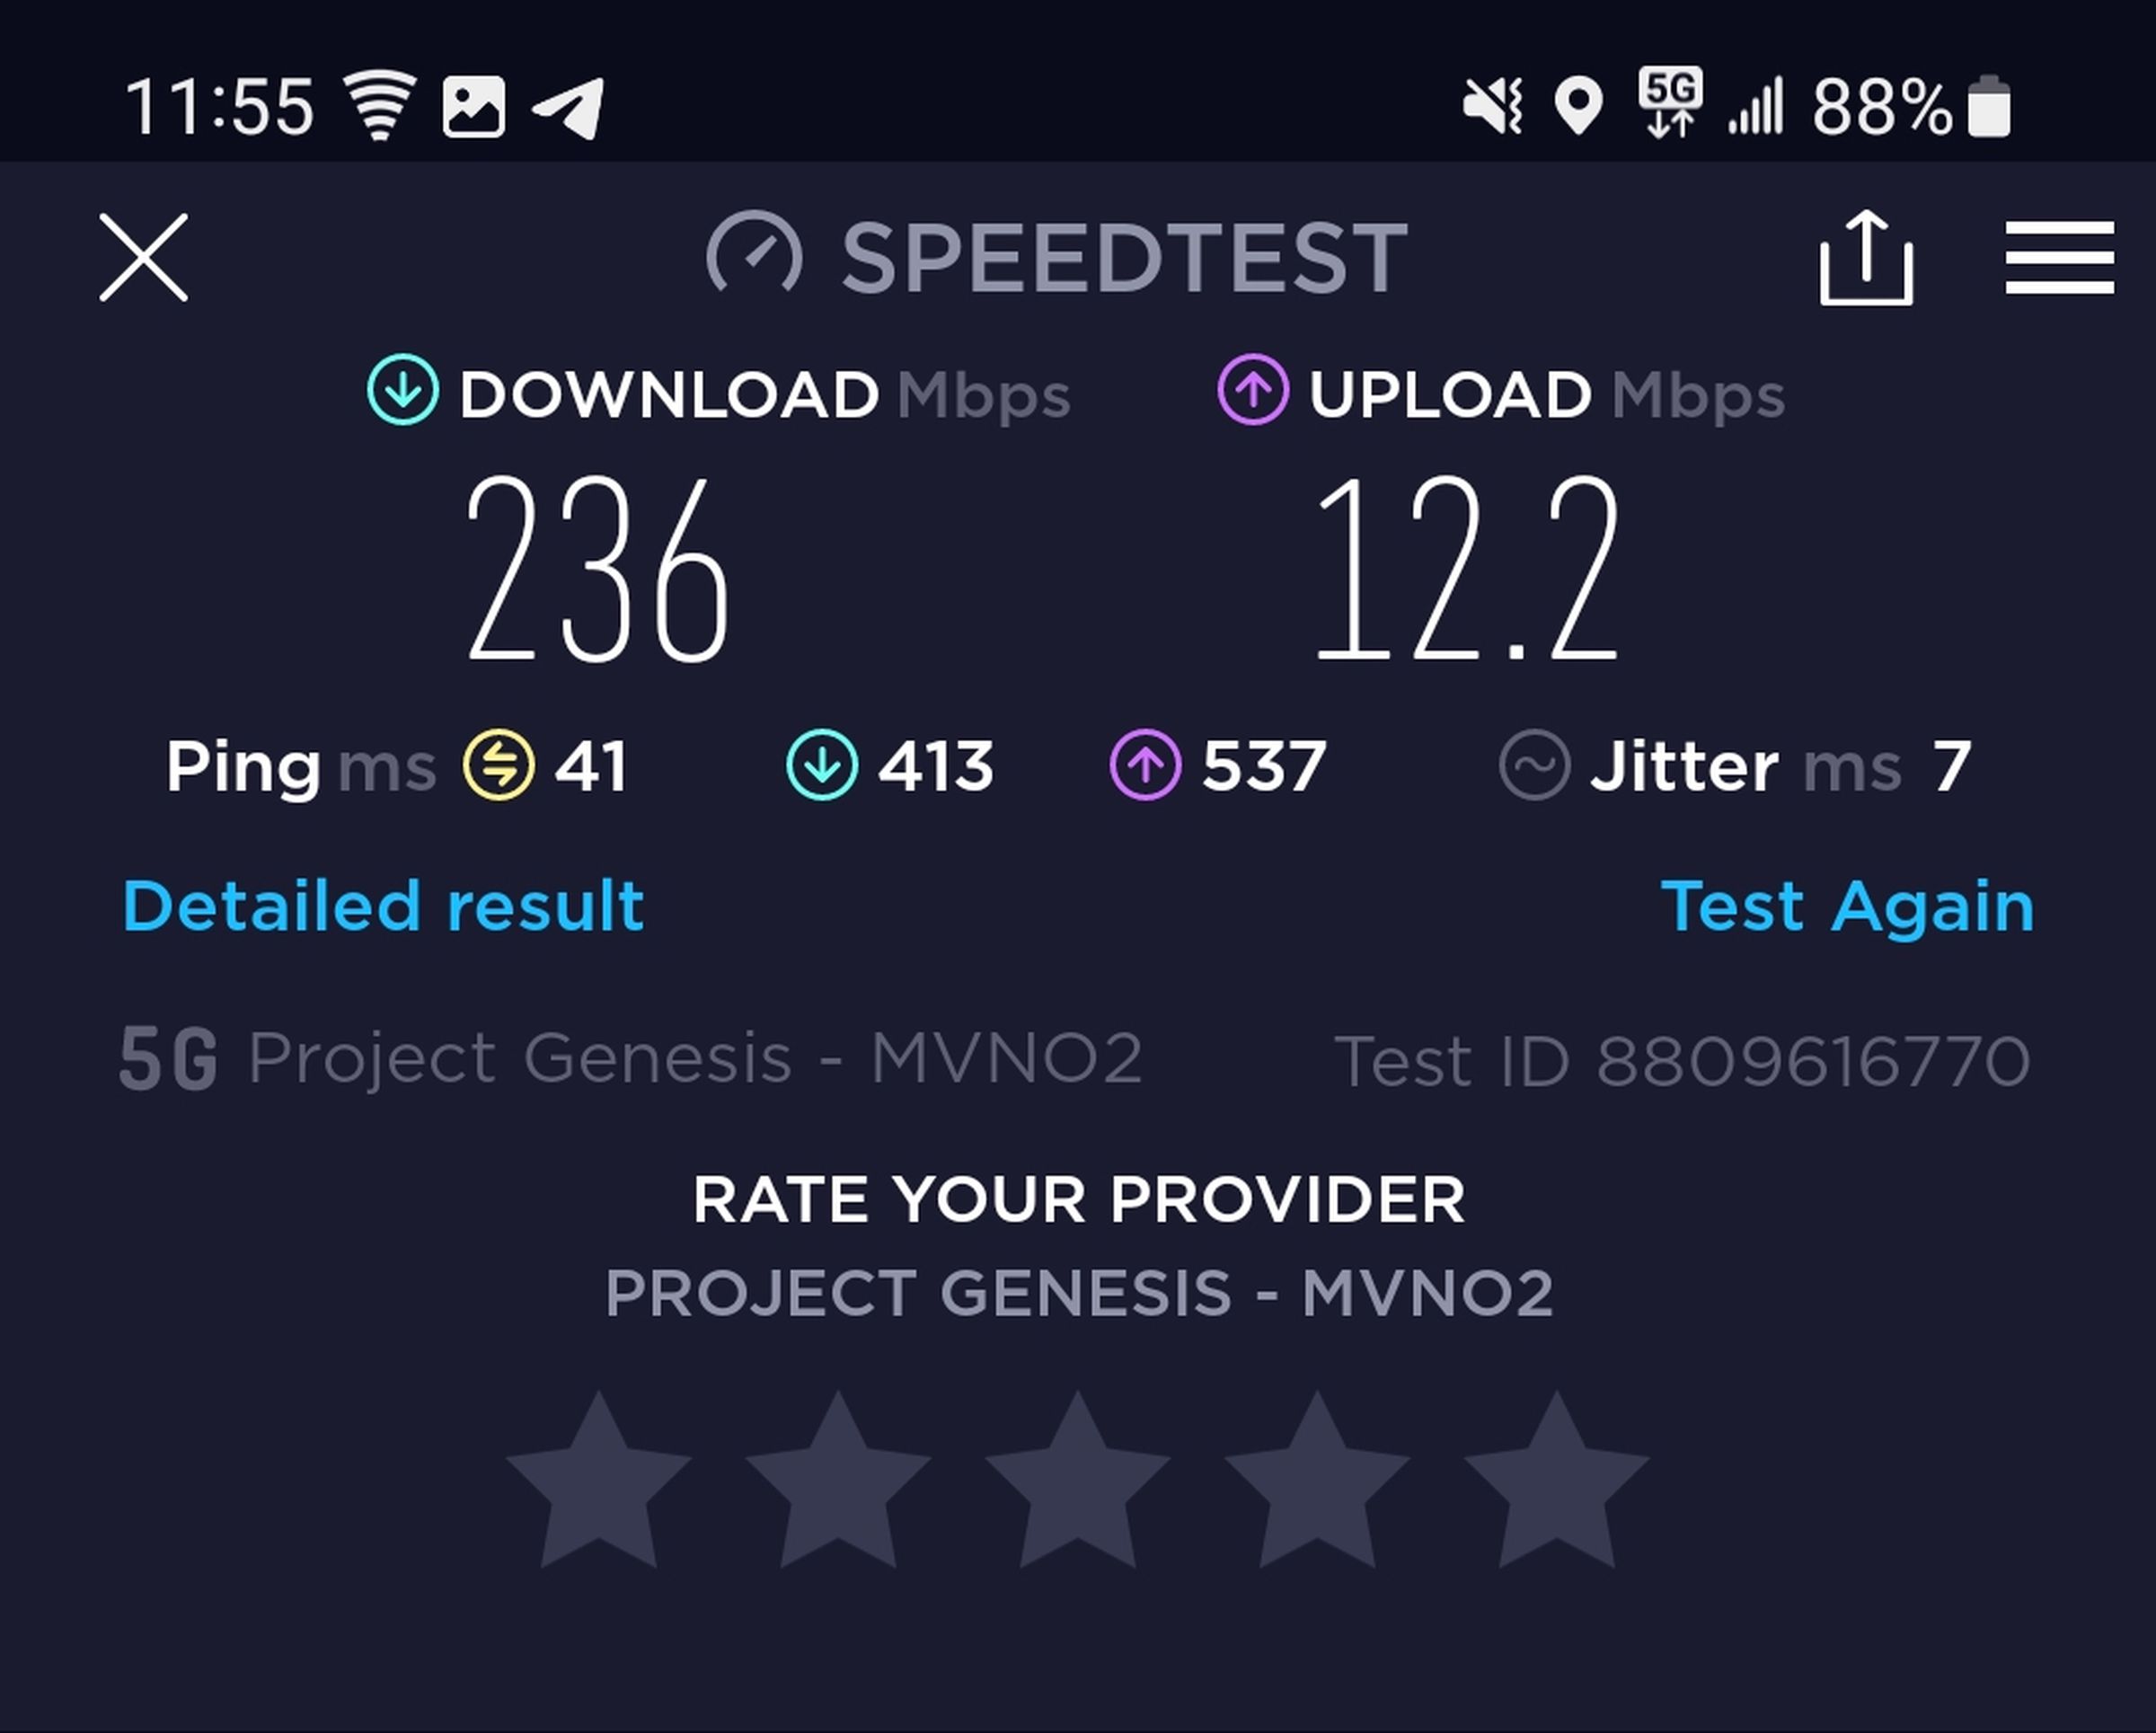 Screenshot of speedtest results showing download speed of 236 Mbps and upload speed of 12.2 Mbps.